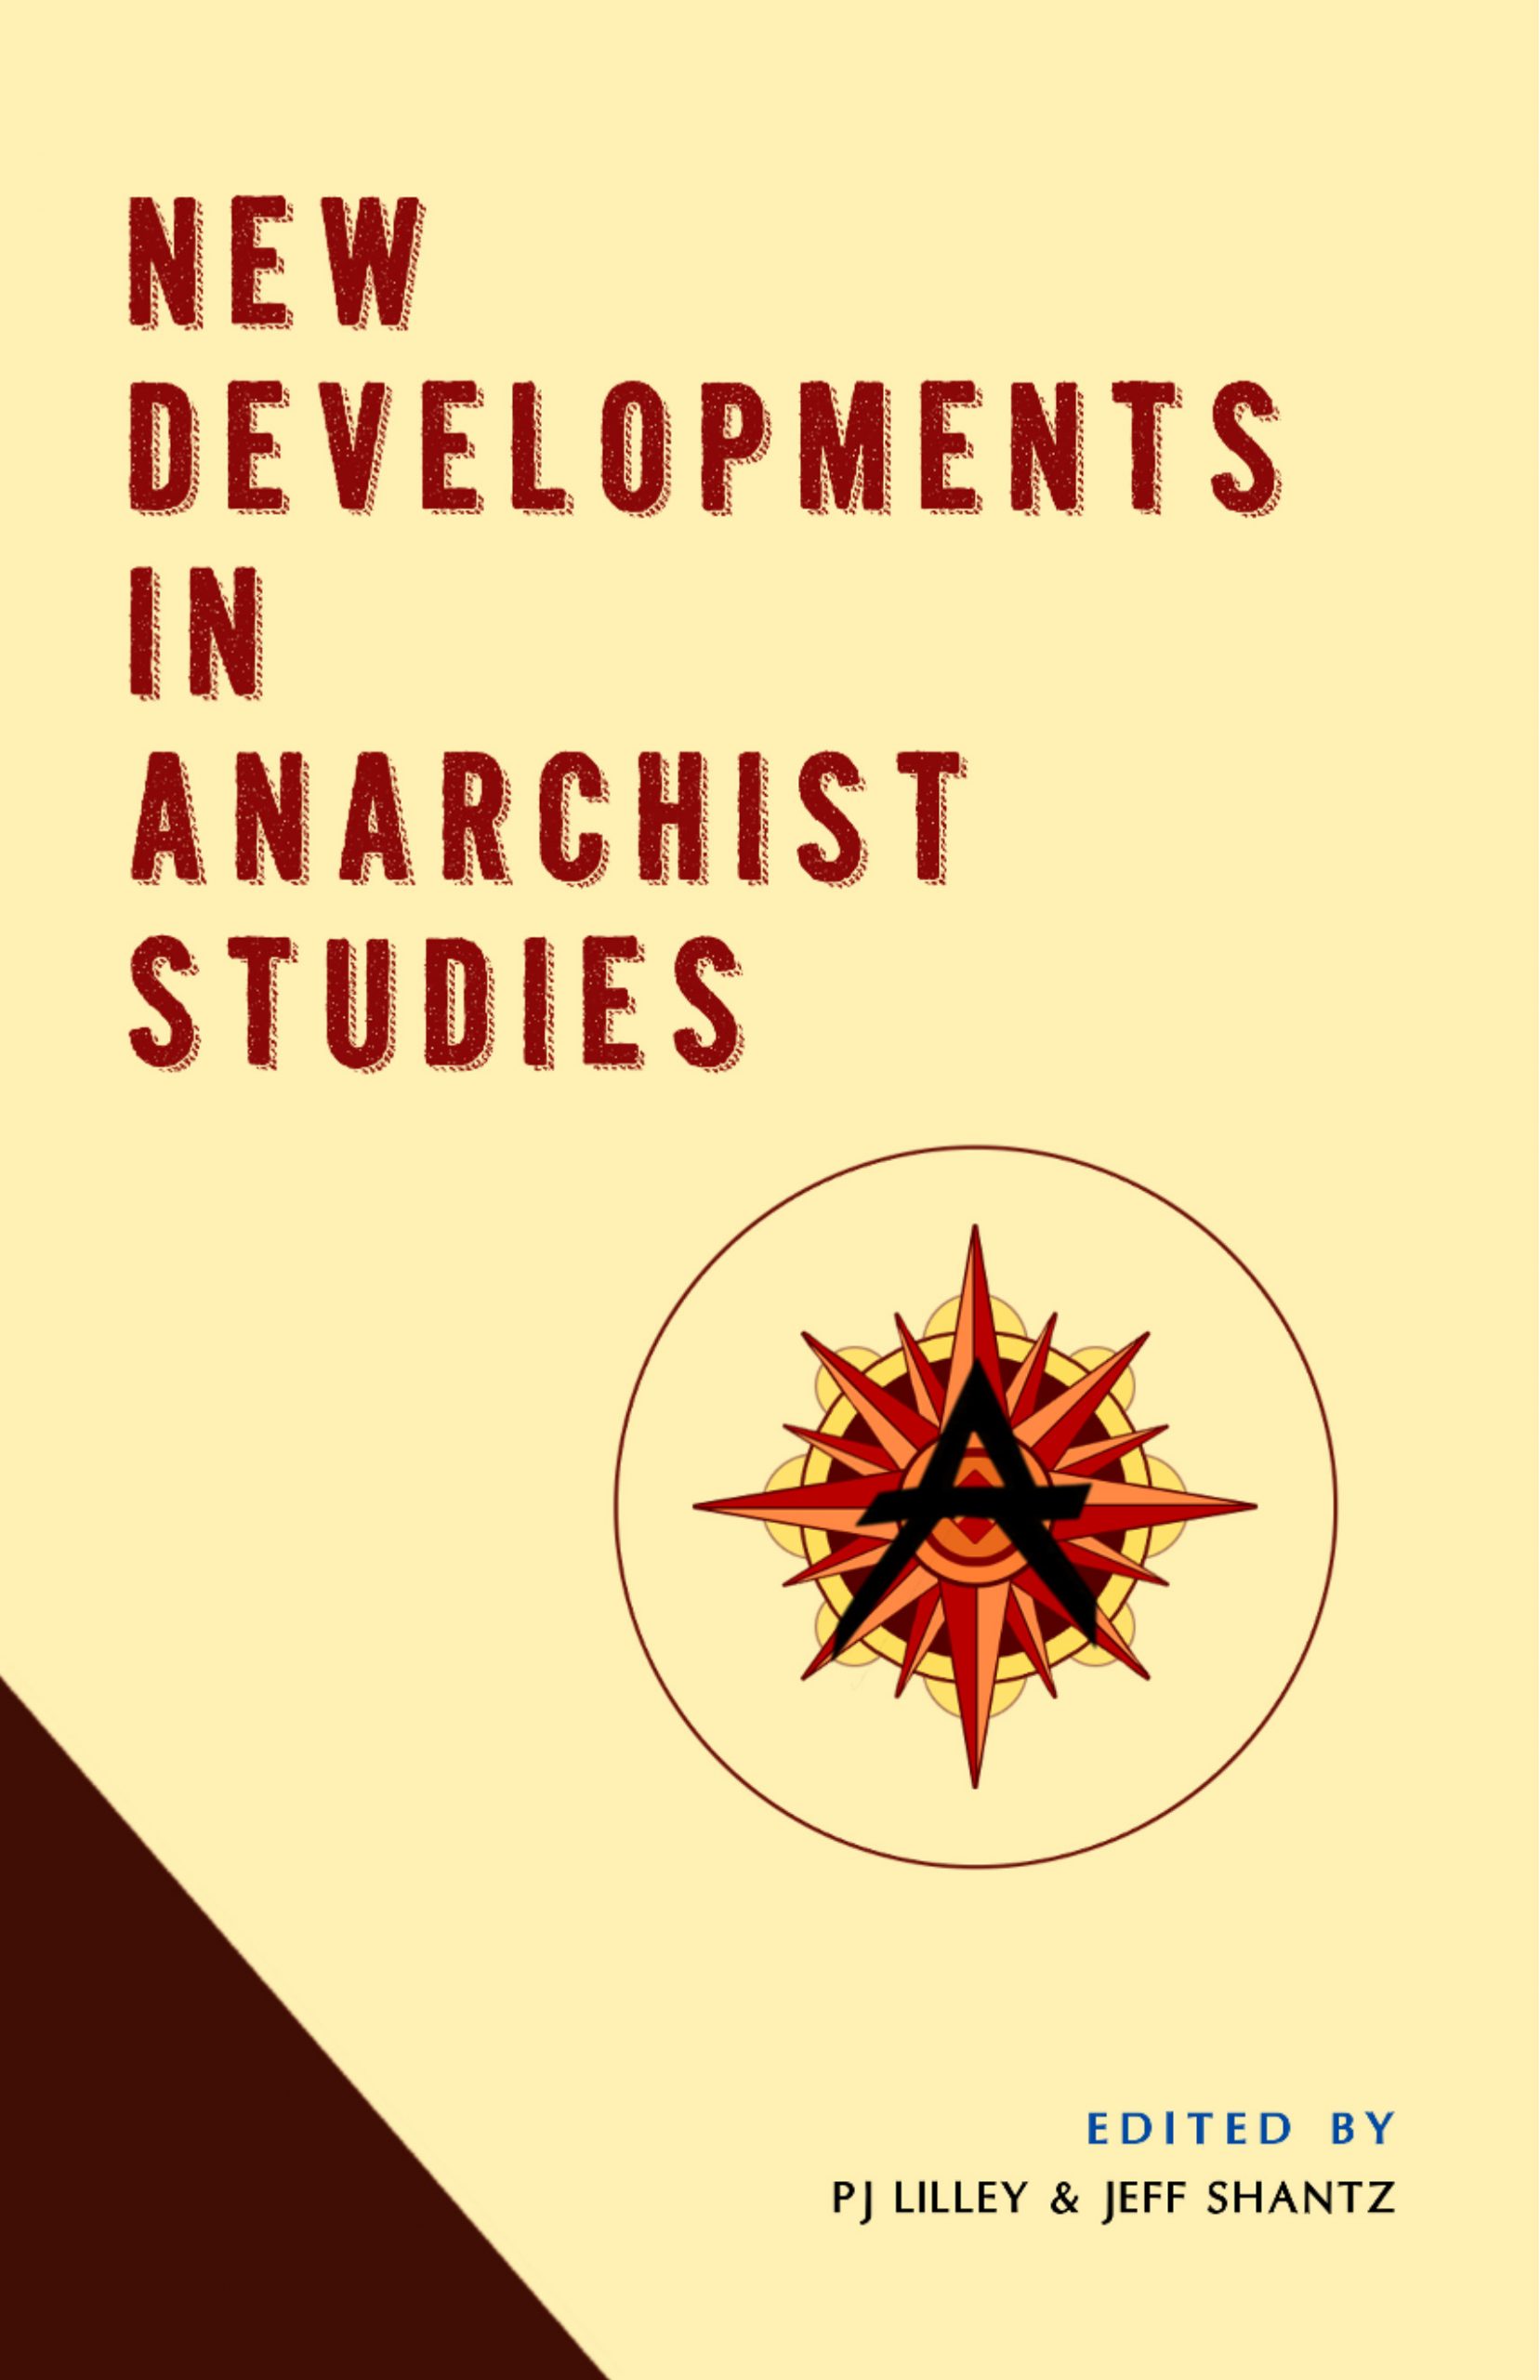 New Developments in Anarchist Studies (punctum books, 2015)